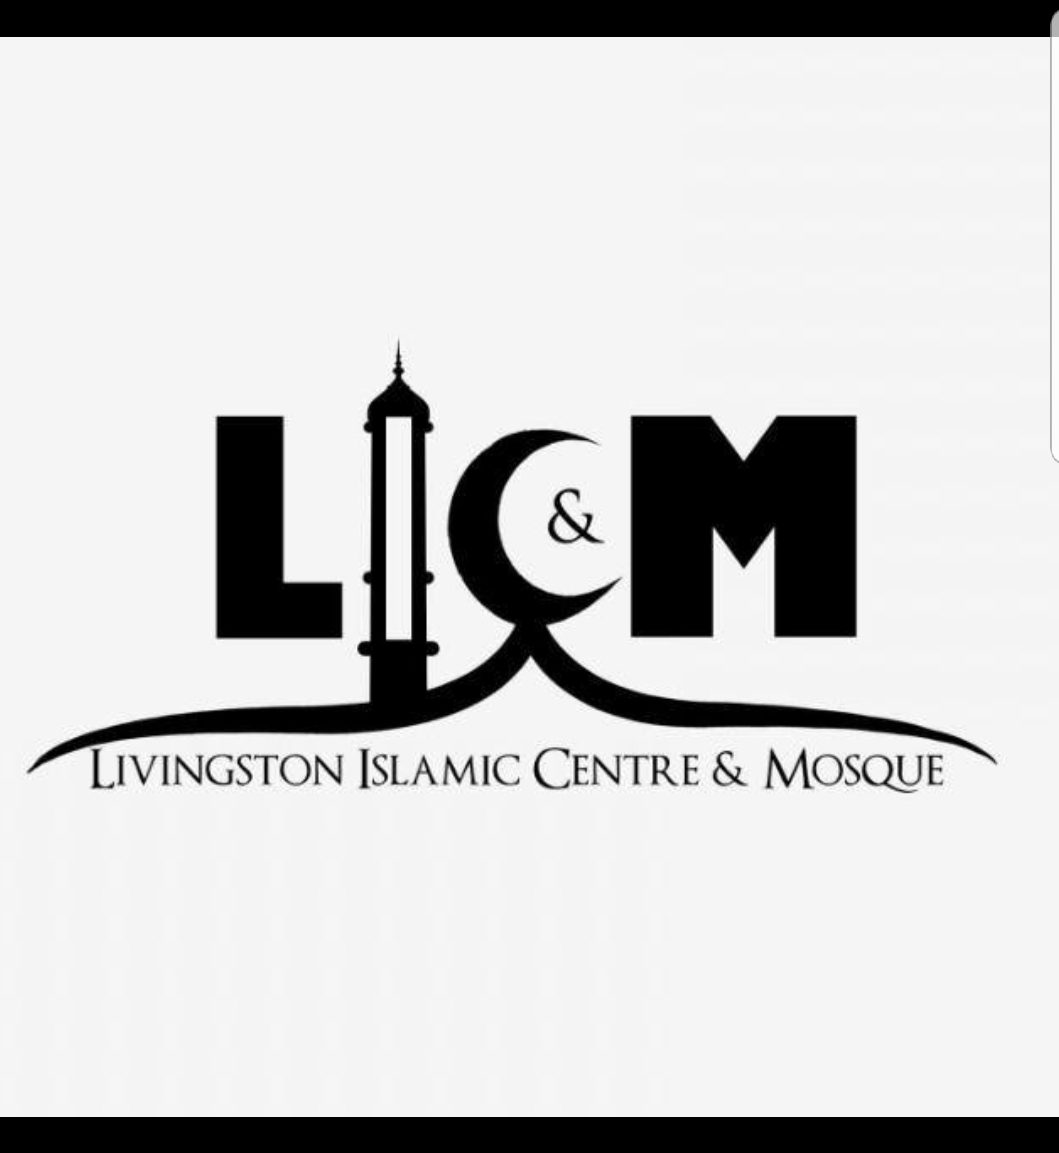 Livingston Islamic Centre & Mosque